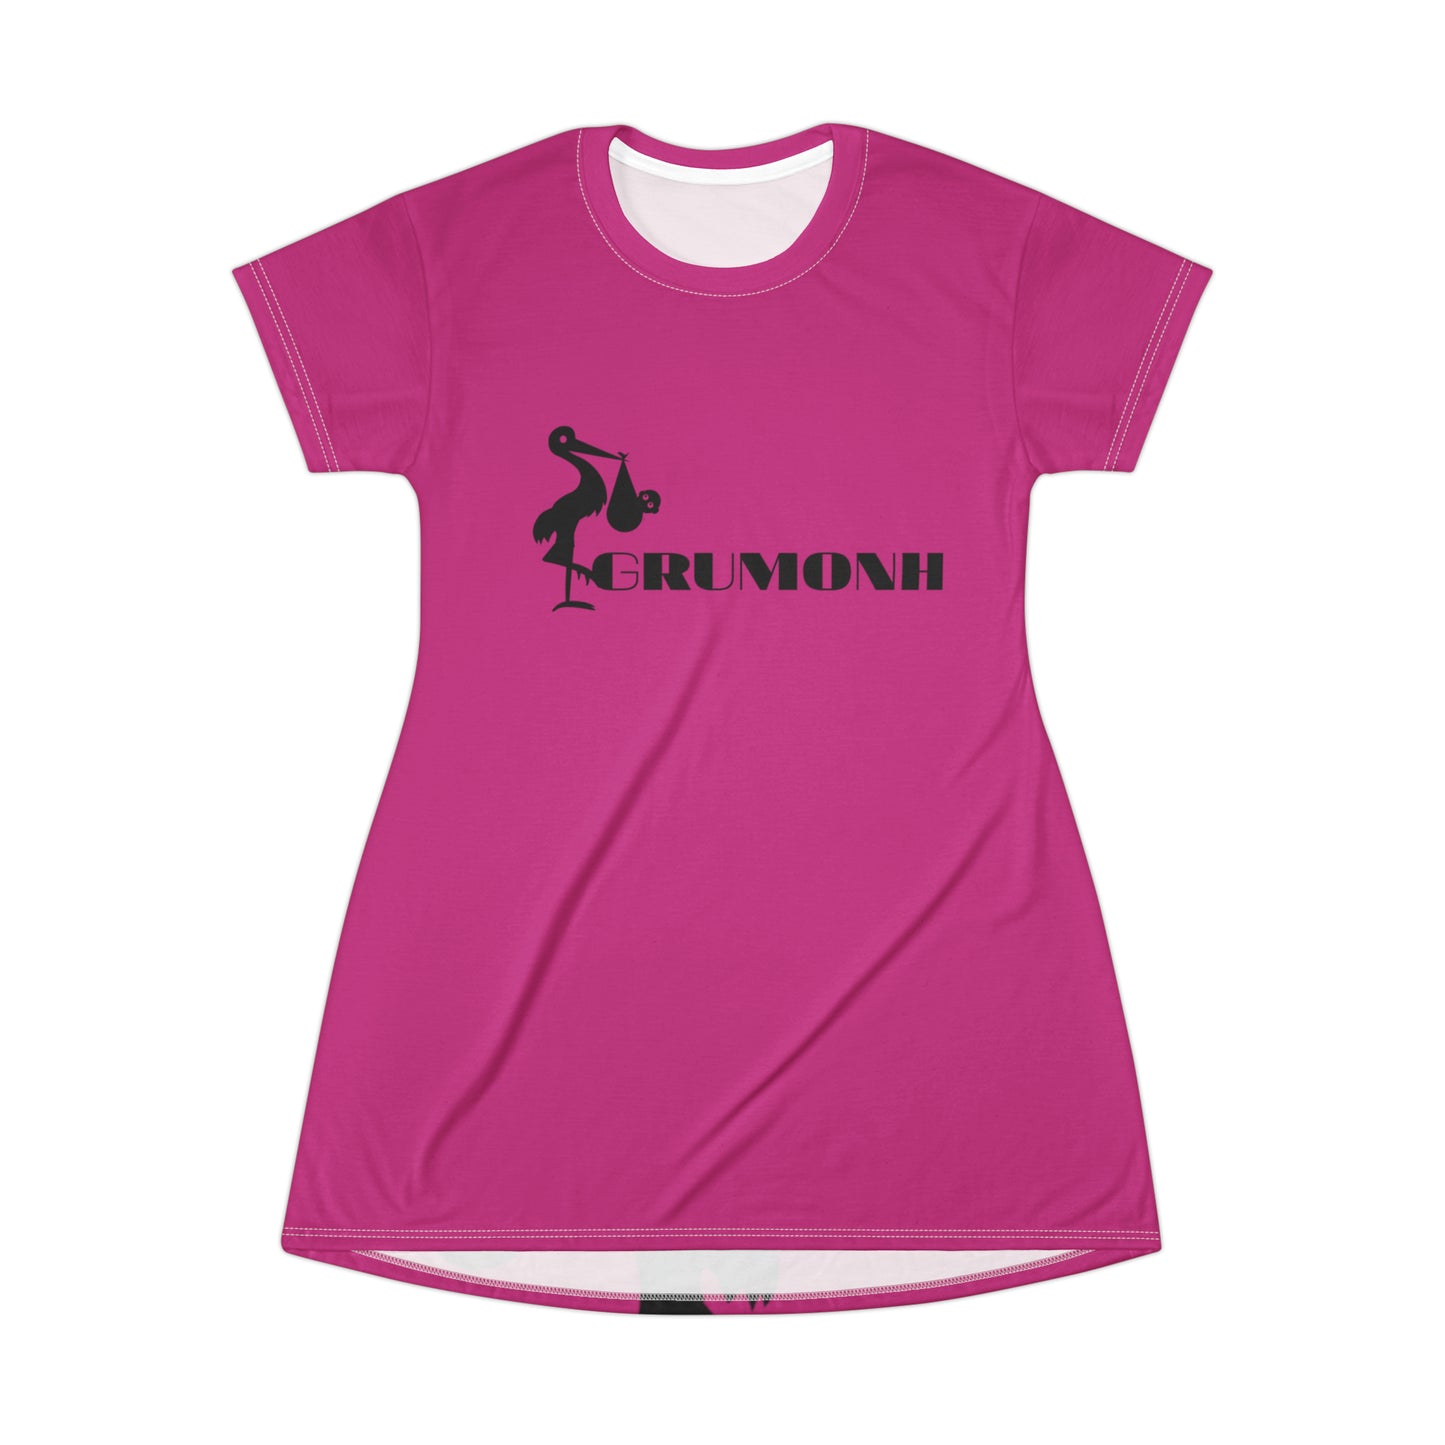 GRUMONH T-Shirt Dress Pink